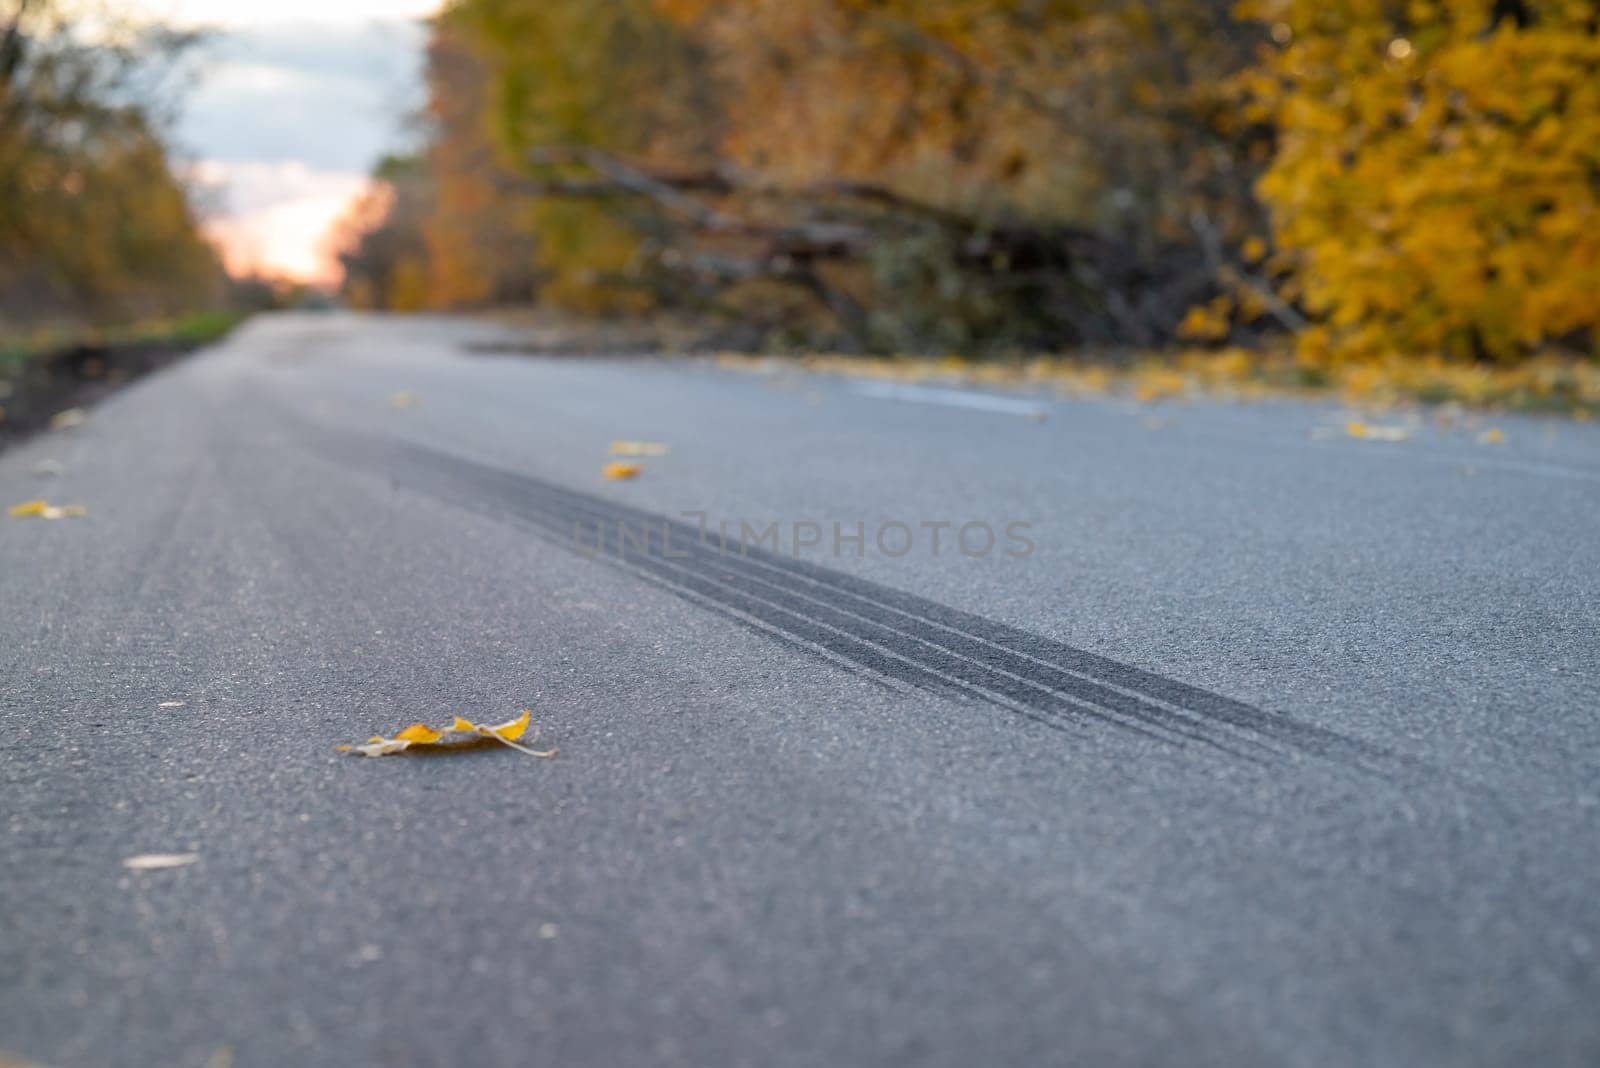 Tire track on the asphalt road, emergency braking, car accident by VitaliiPetrushenko